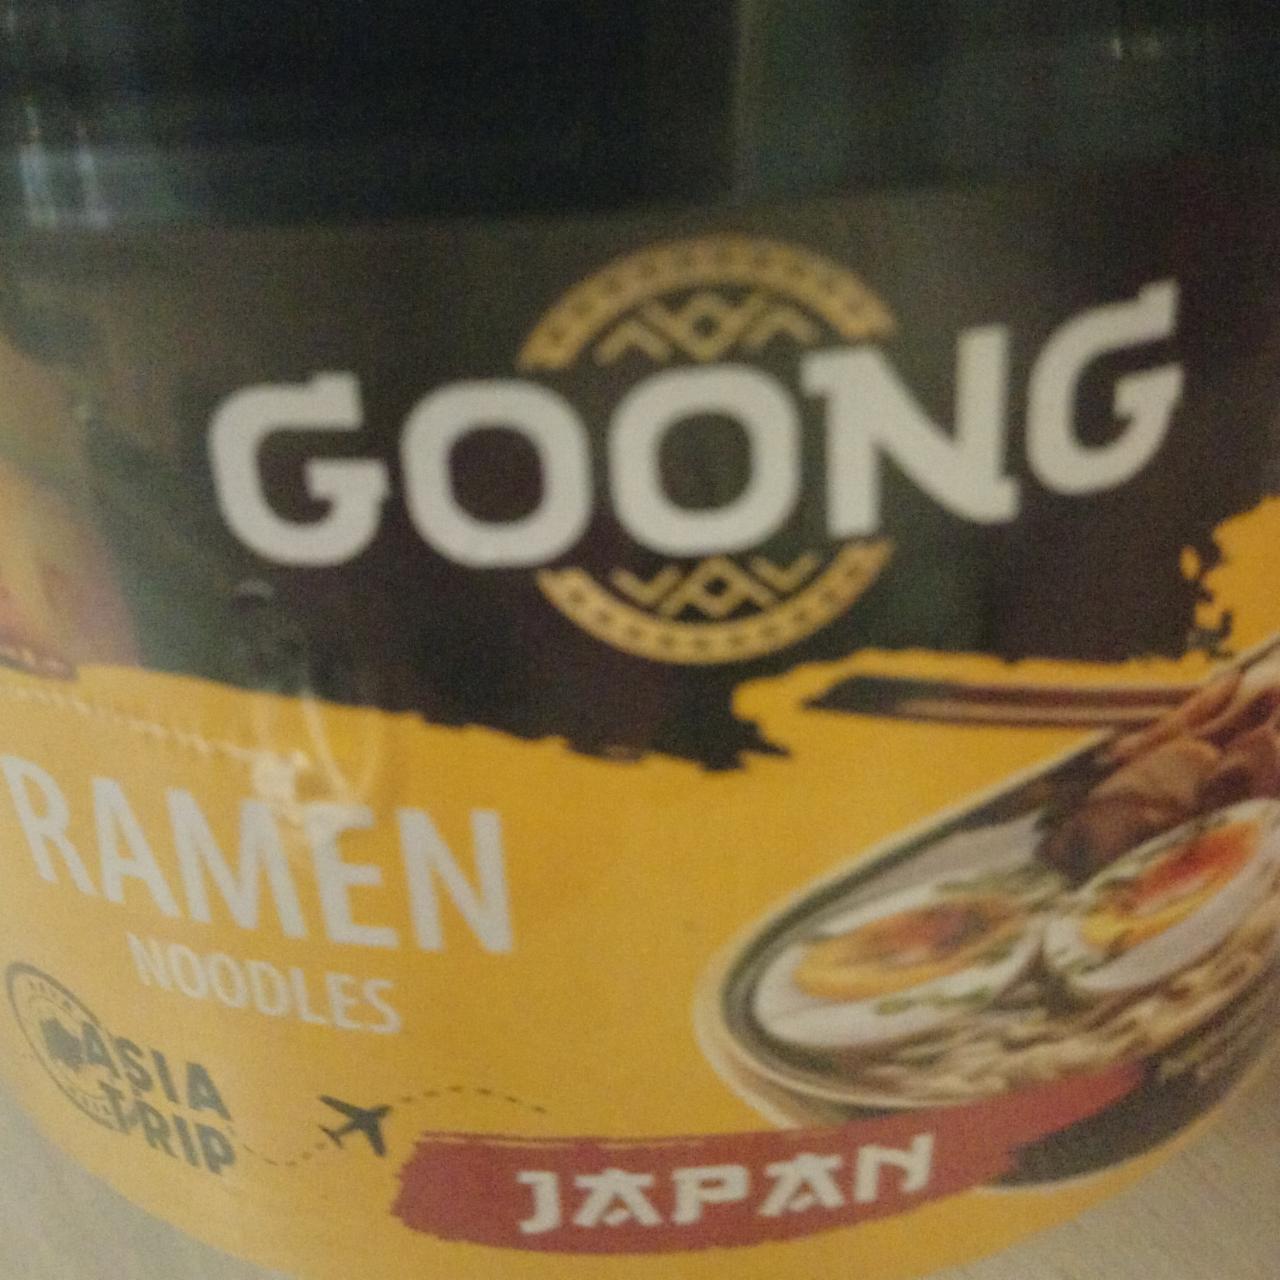 Zdjęcia - Ramen noodles japan Goong